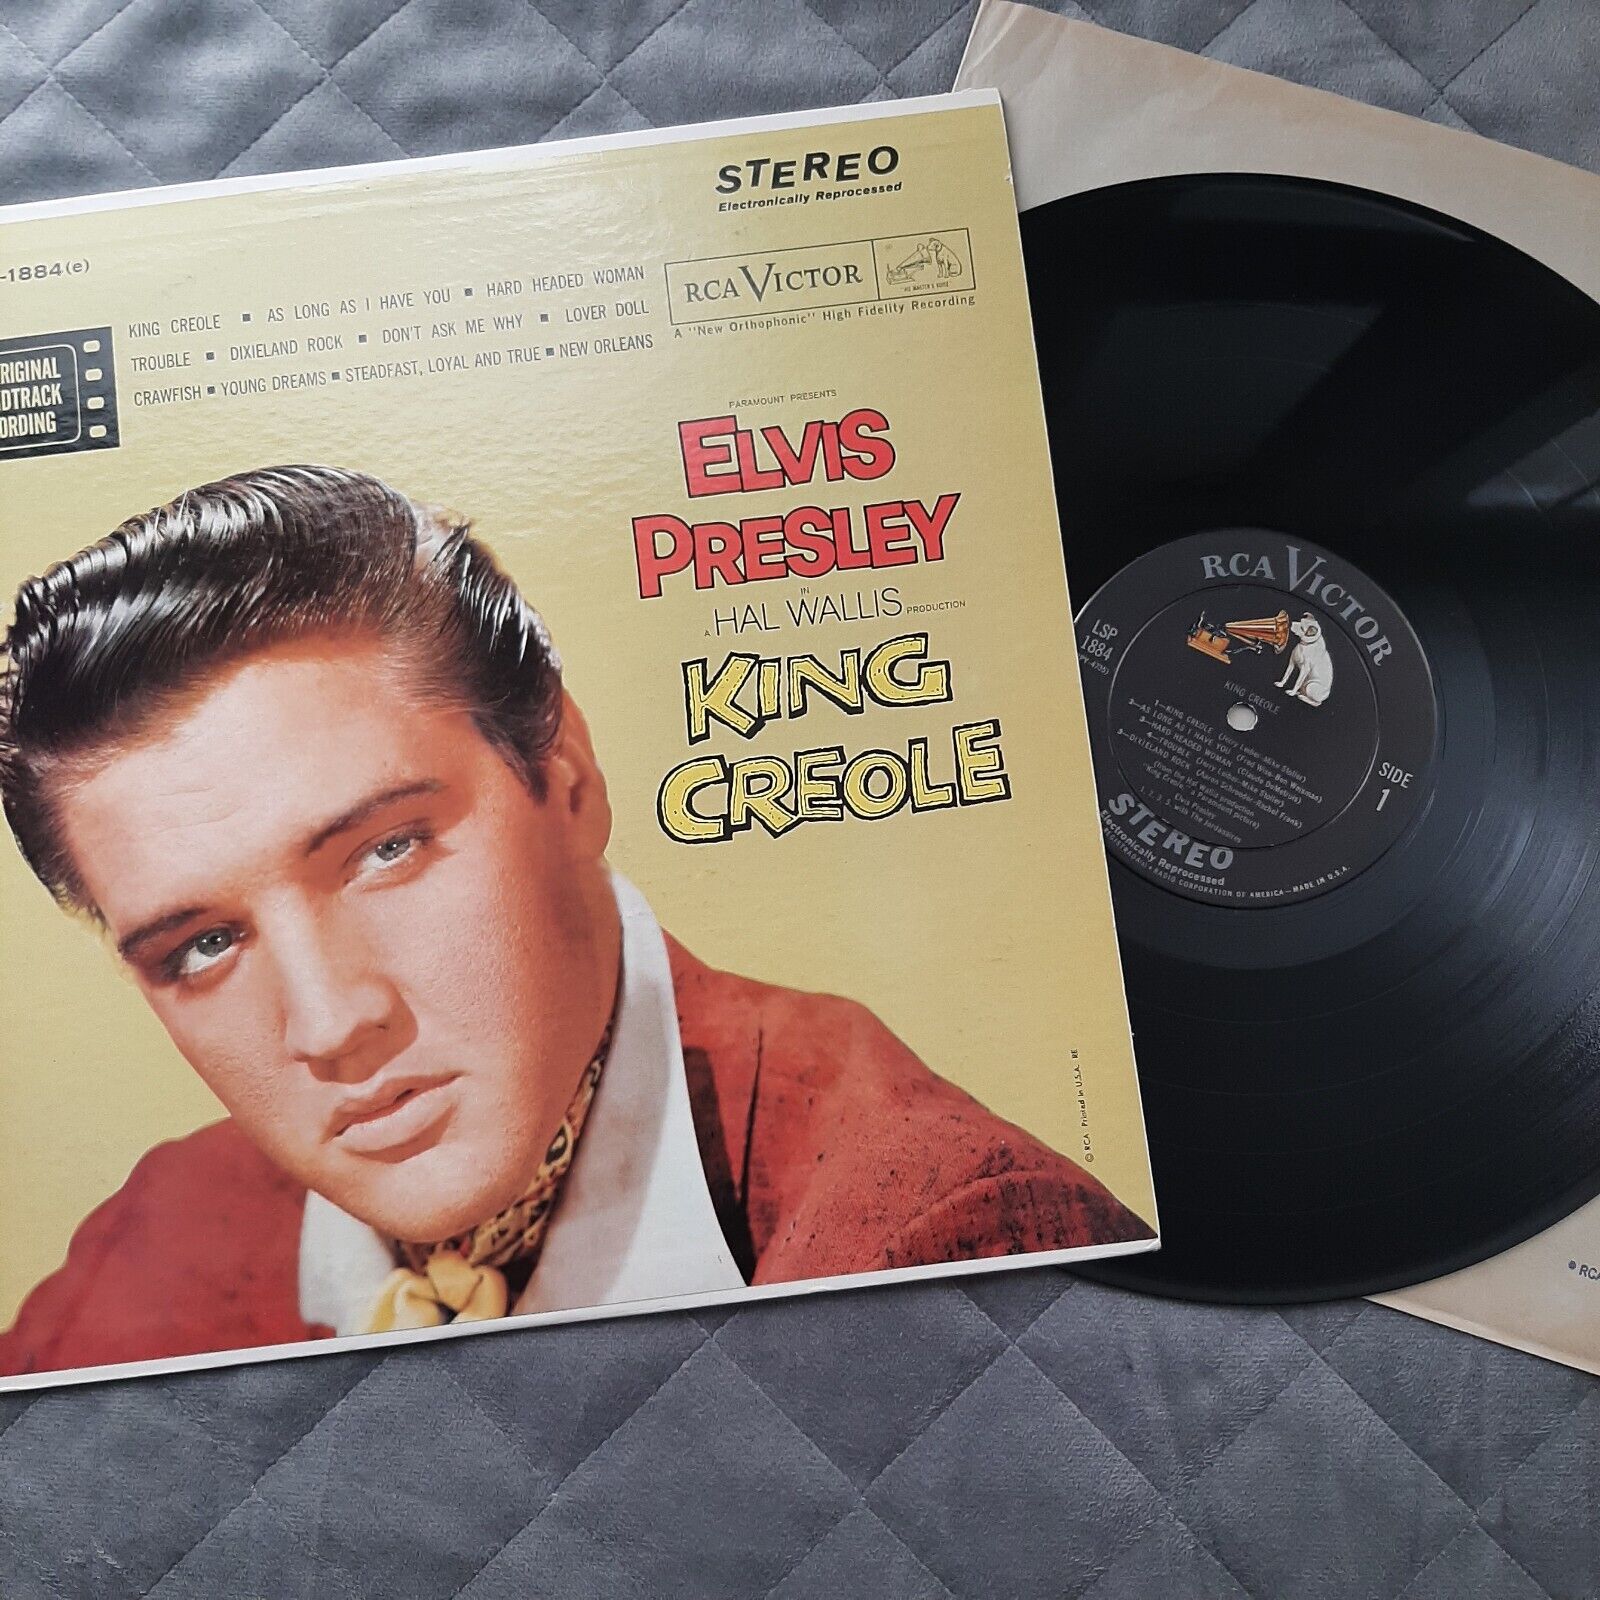 Elvis Presley KING CREOLE LSP-1884(e) (USA 1962 ORIGINAL) RARE STAGGERED STEREO